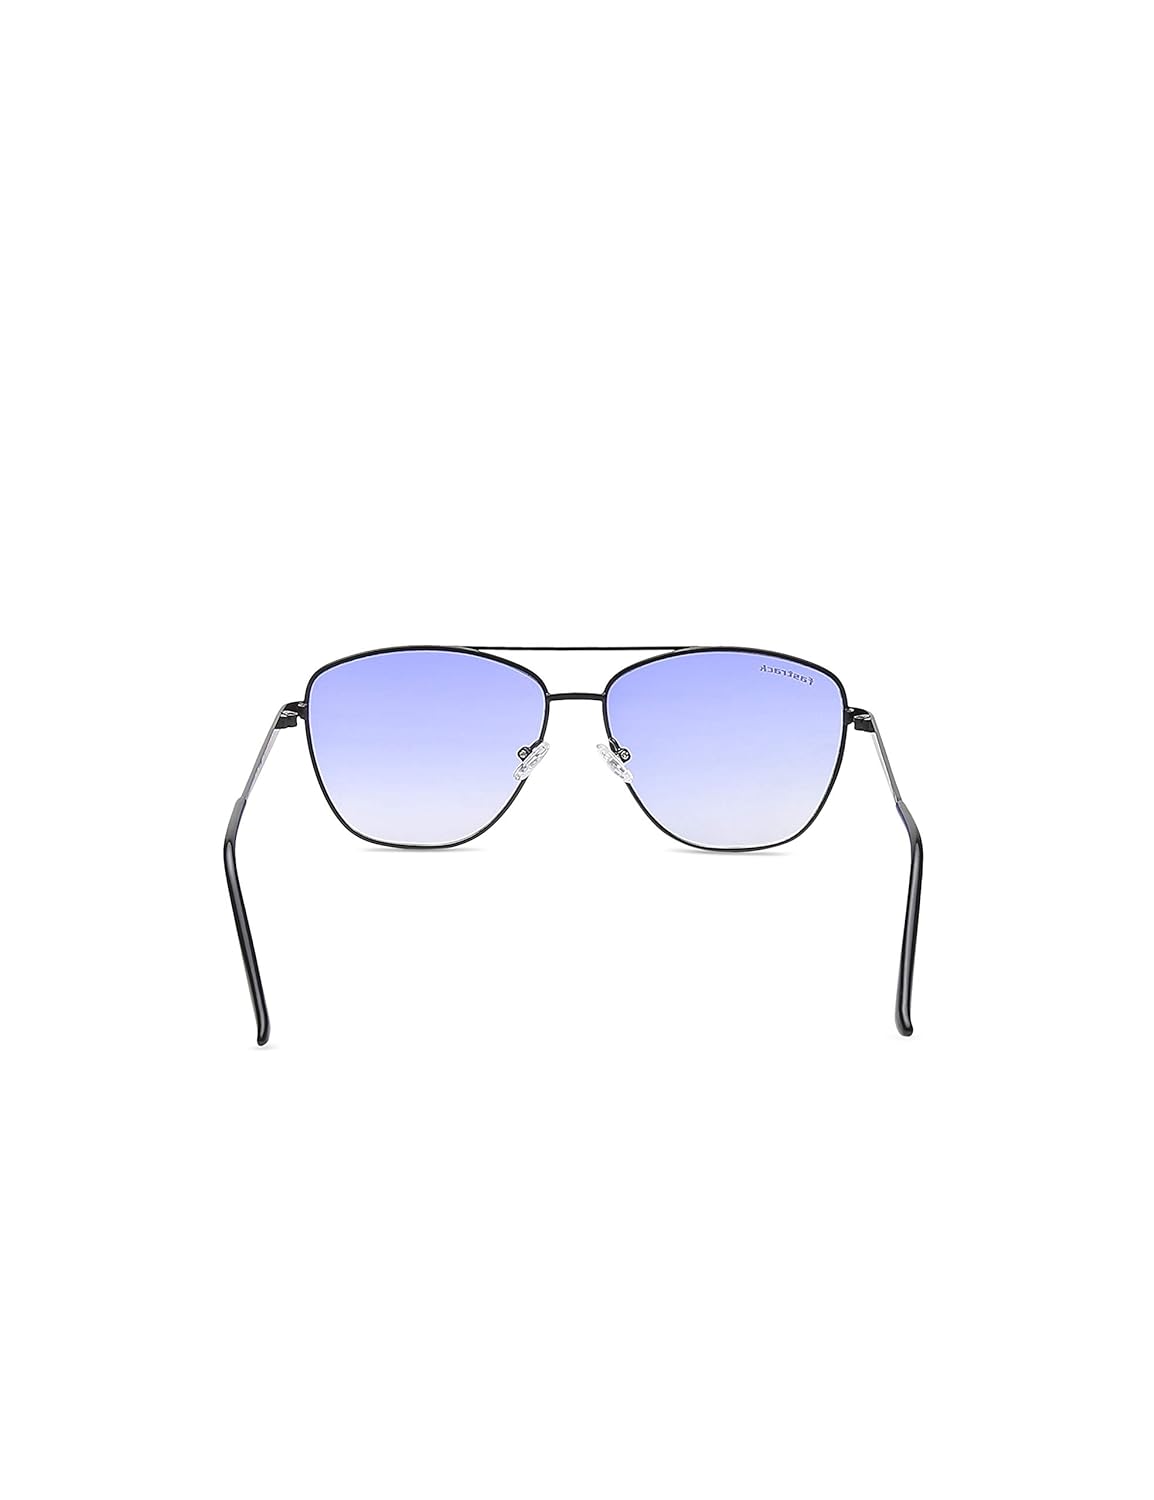 Fastrack Men's Gradient Blue Lens Pilot Sunglasses 